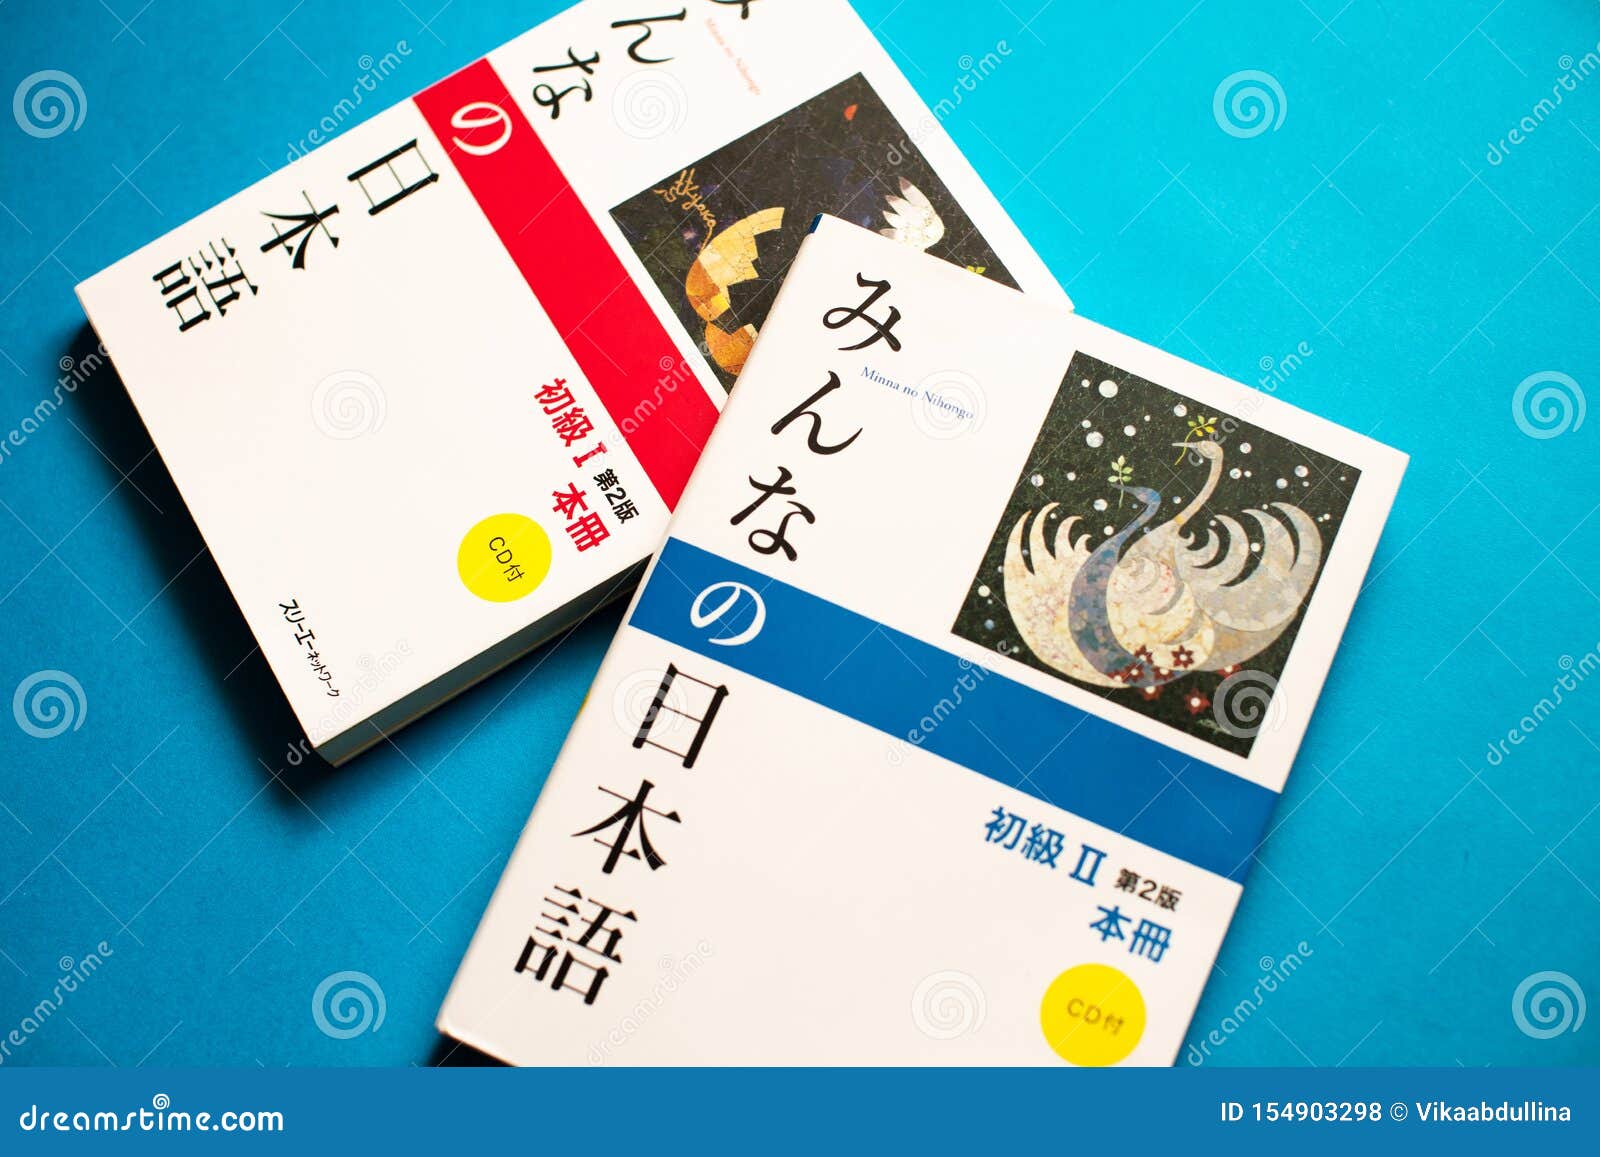 Minna No Nihongo Japanese Language Book Editorial Stock Photo Image Of Jlpt Foreigner